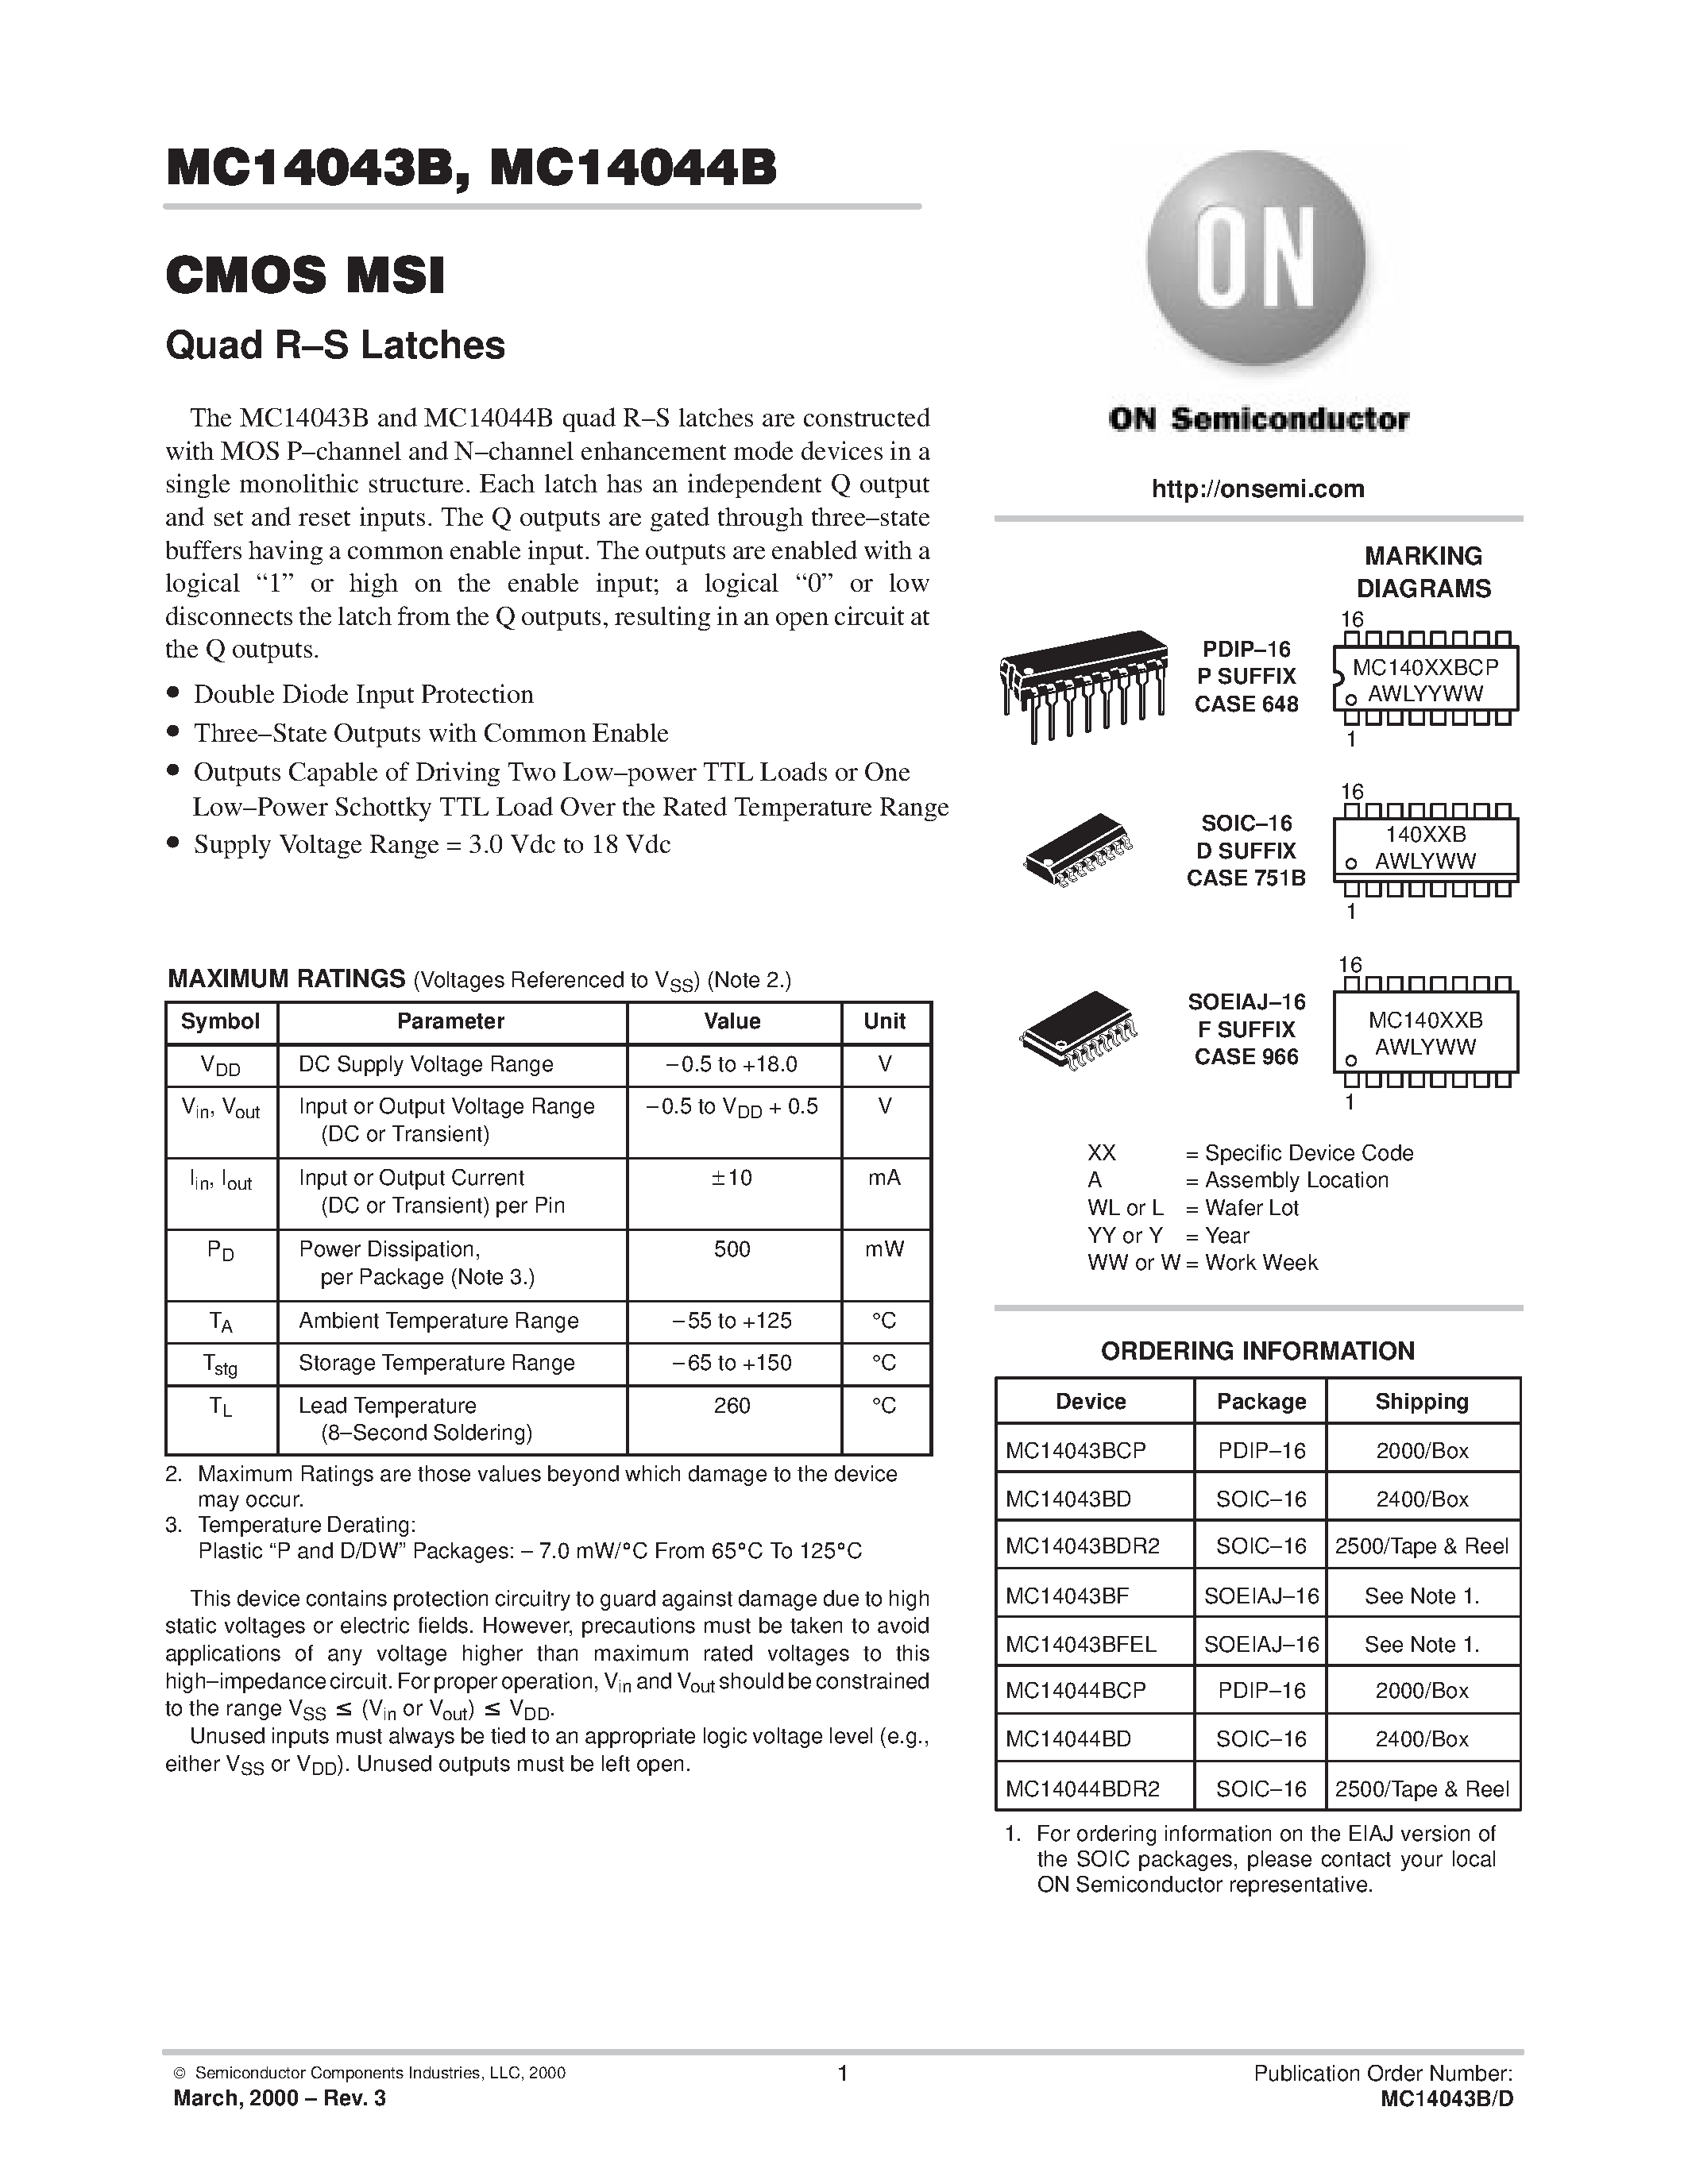 Datasheet MC14043BD - CMOS MSI(Quad R-S Latches) page 1